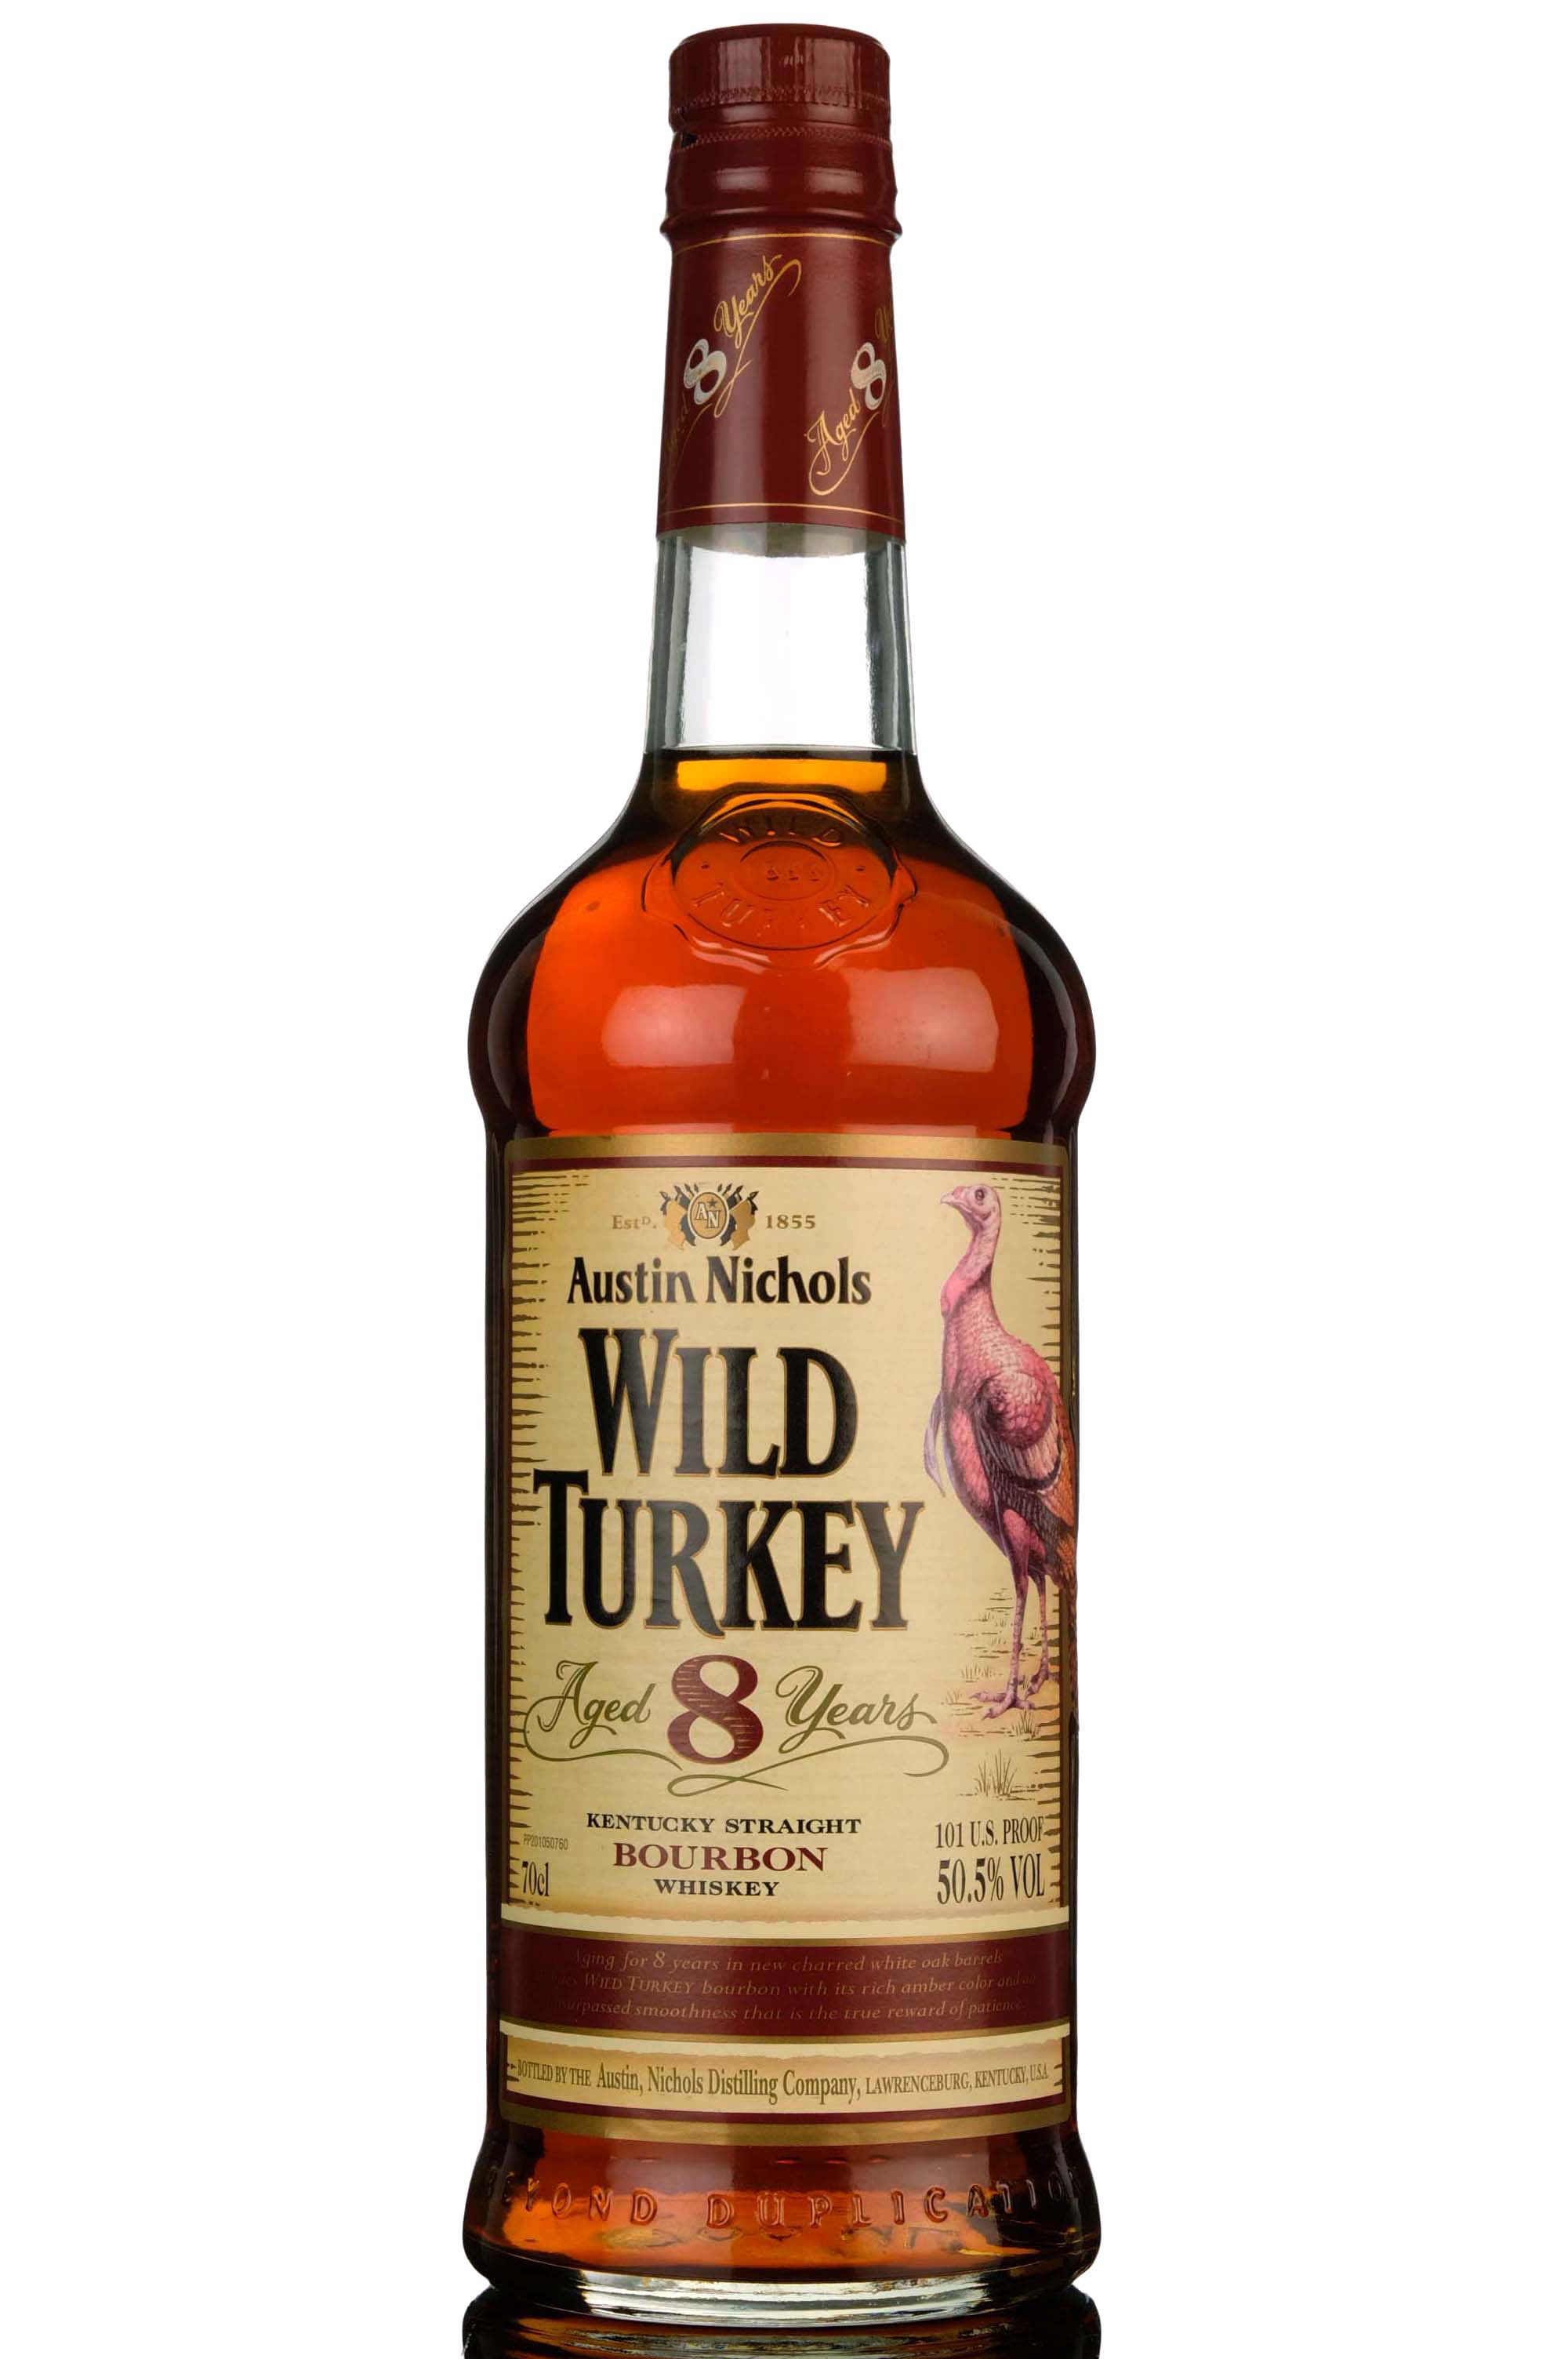 Austin Nichols Wild Turkey 8 Year Old - 101 Proof - 2003 Release